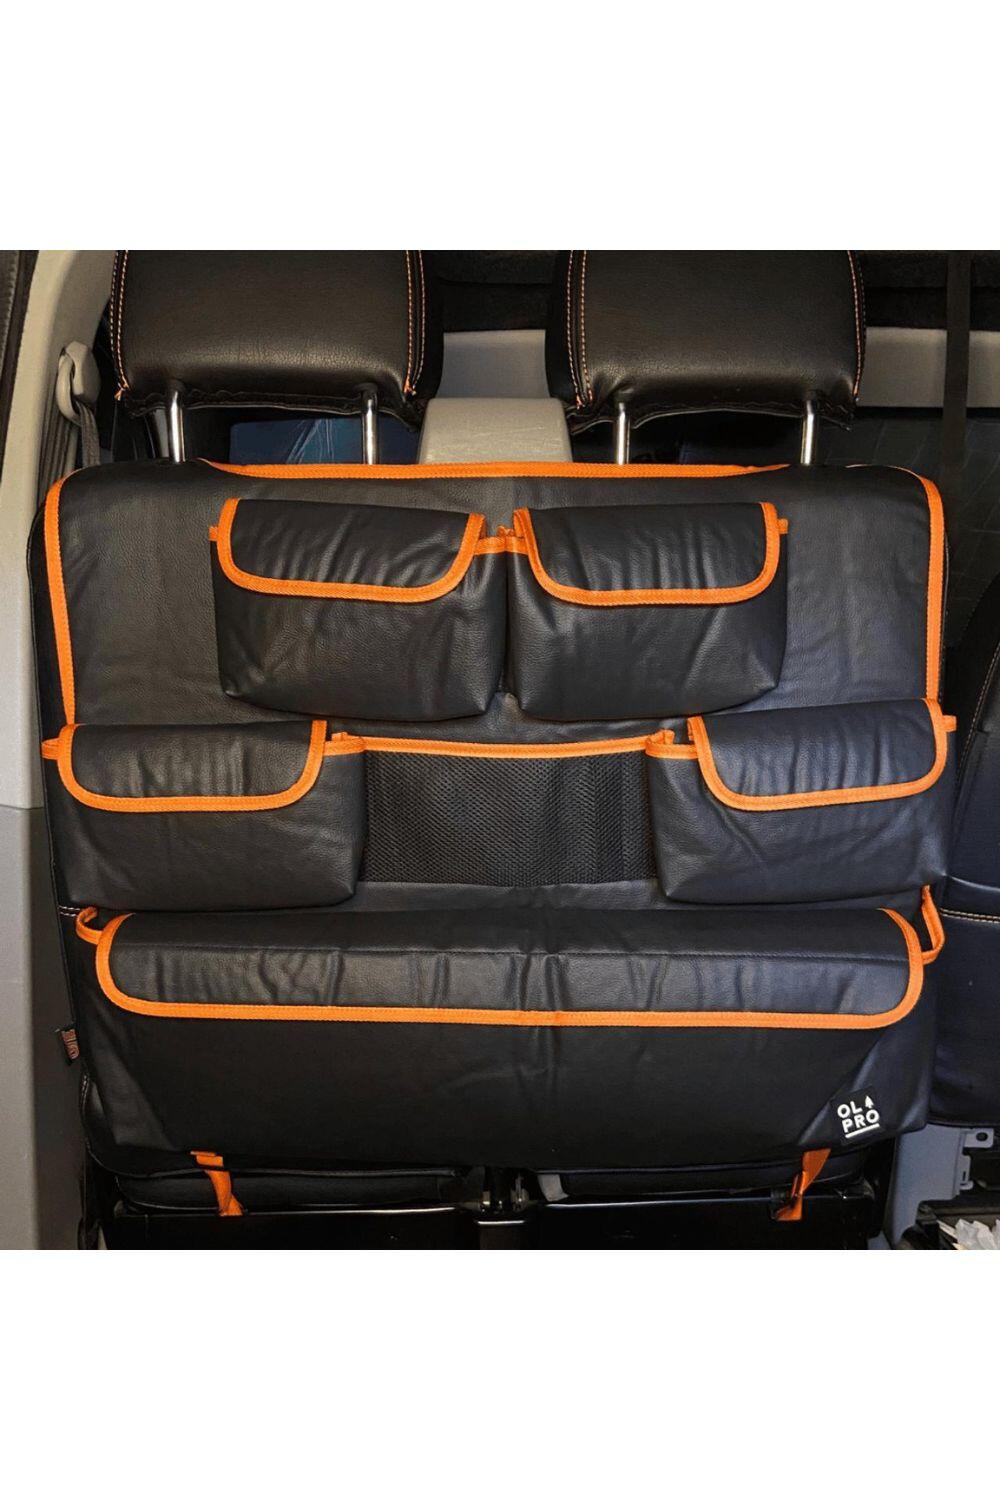 OLPRO Double Seat Organiser Orange 2/3